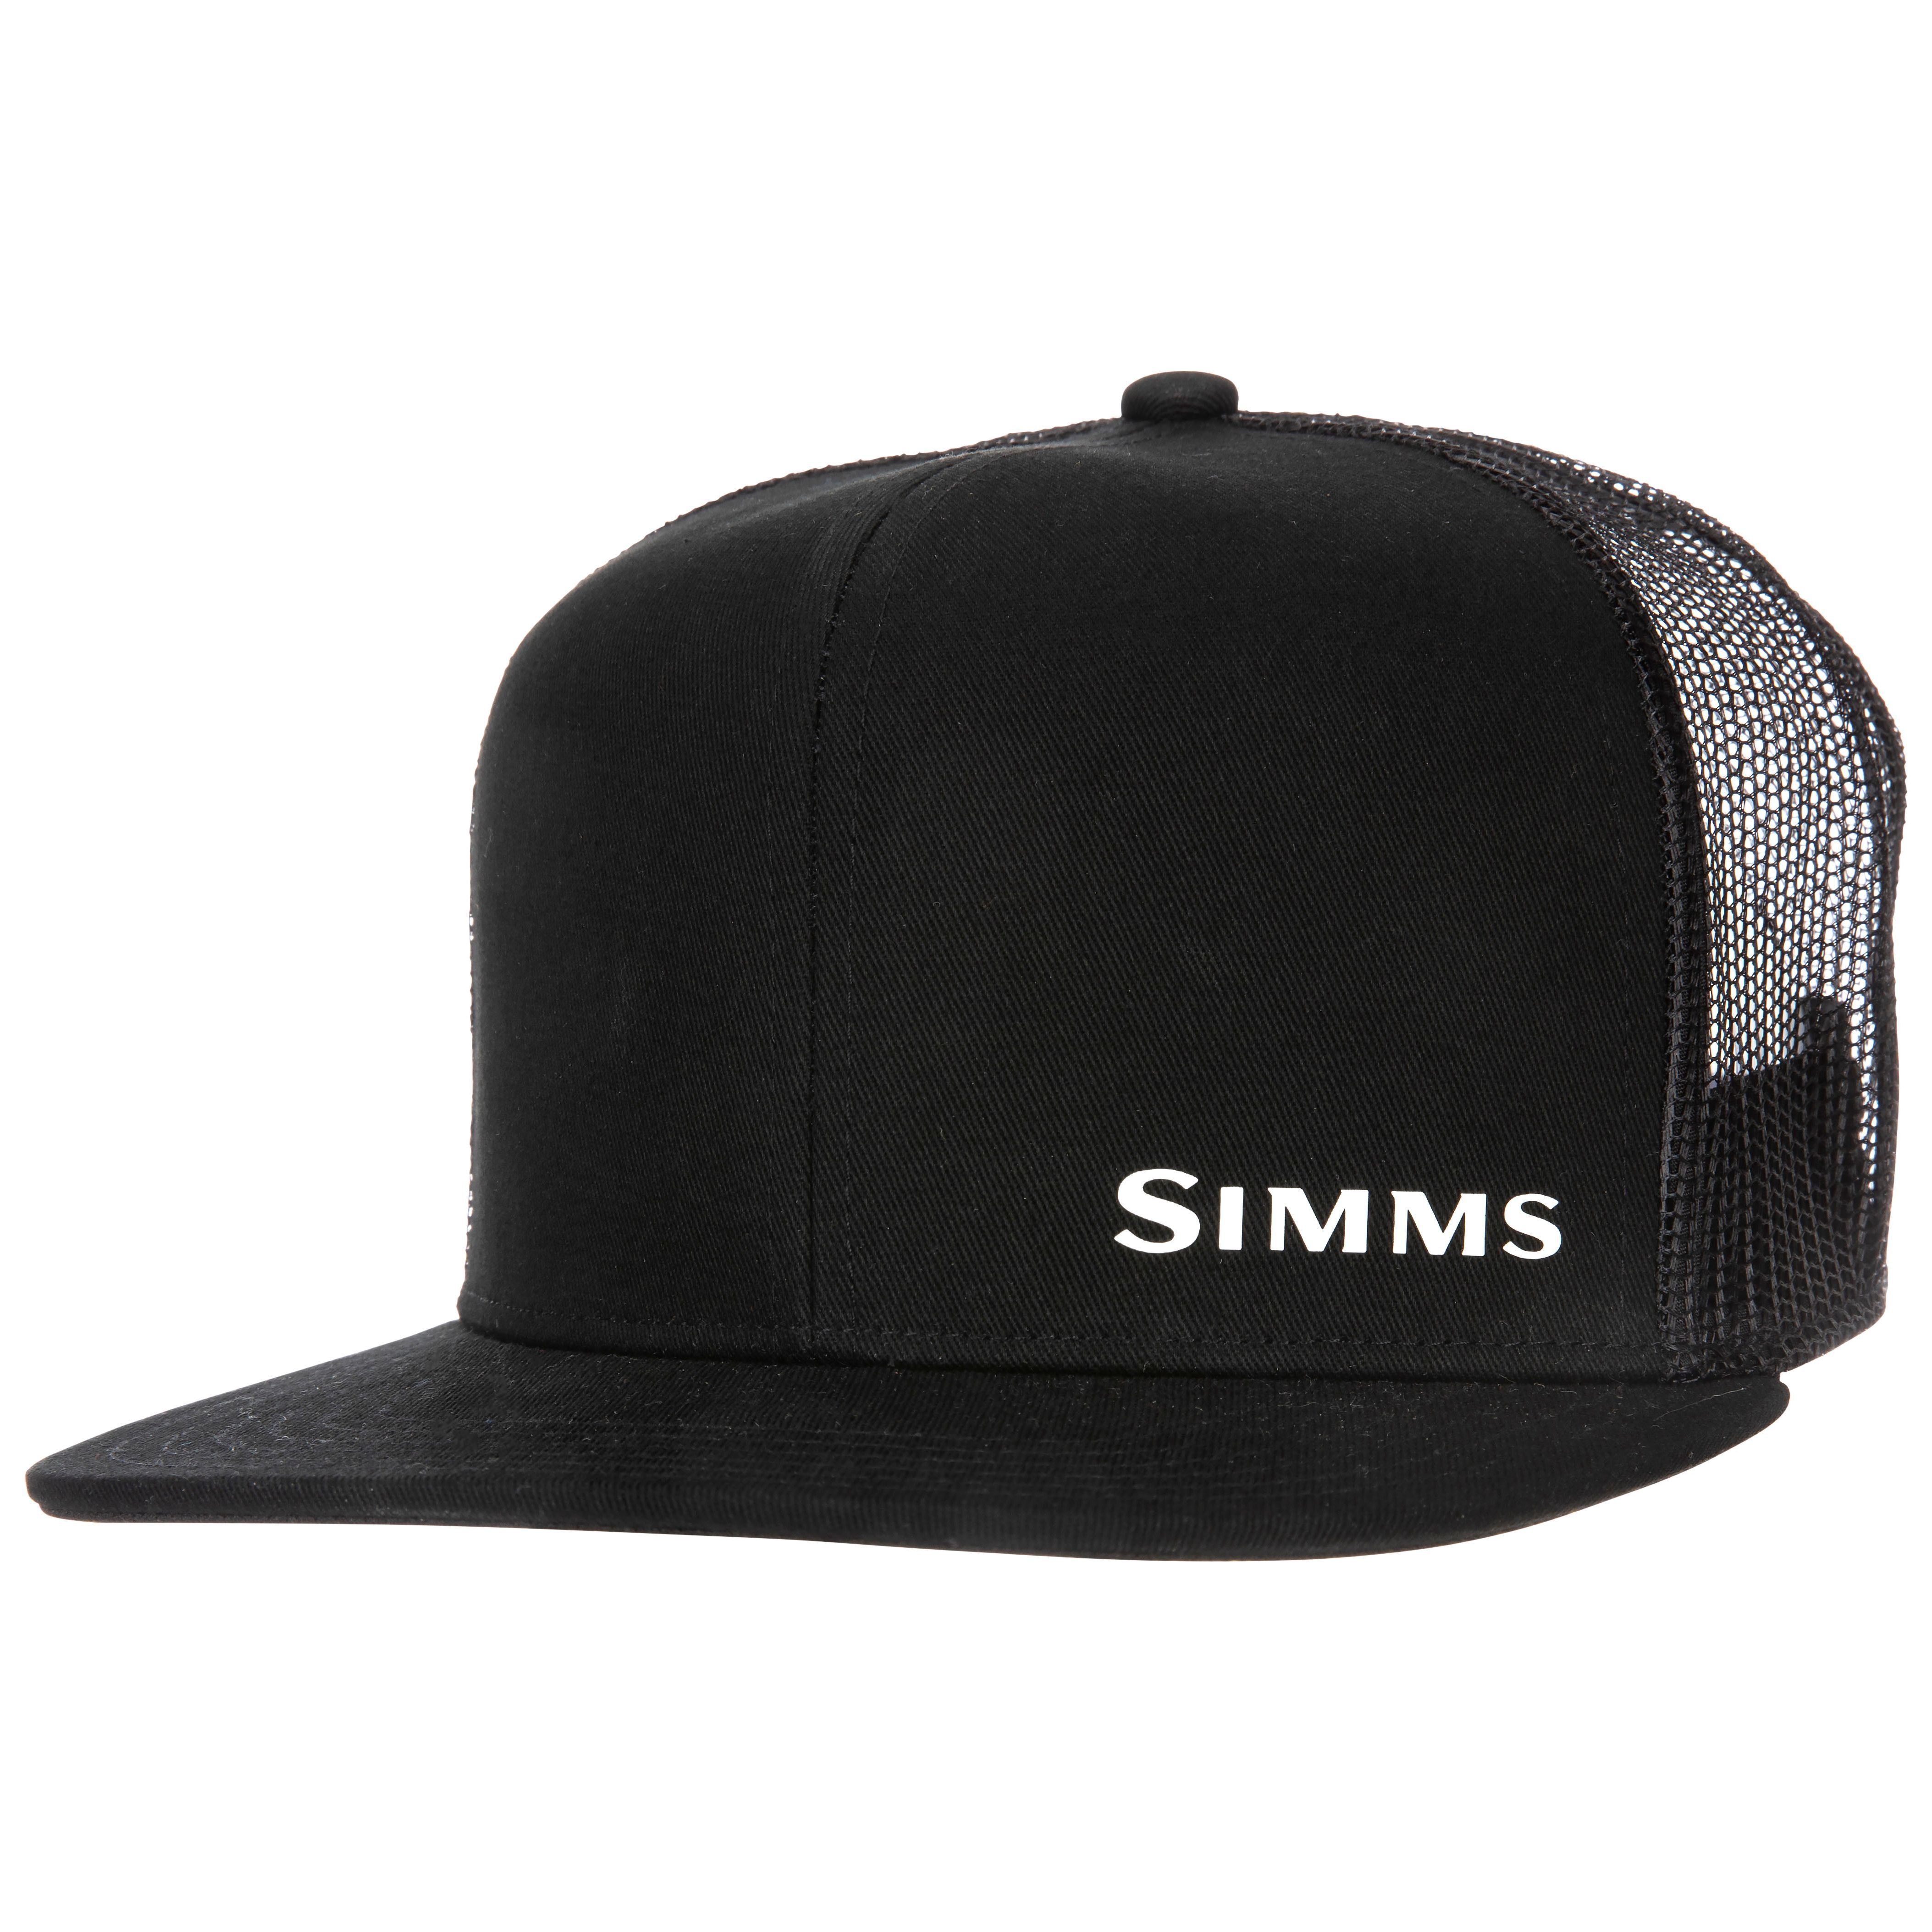 Simms CX Flat Brim Cap Black Image 01